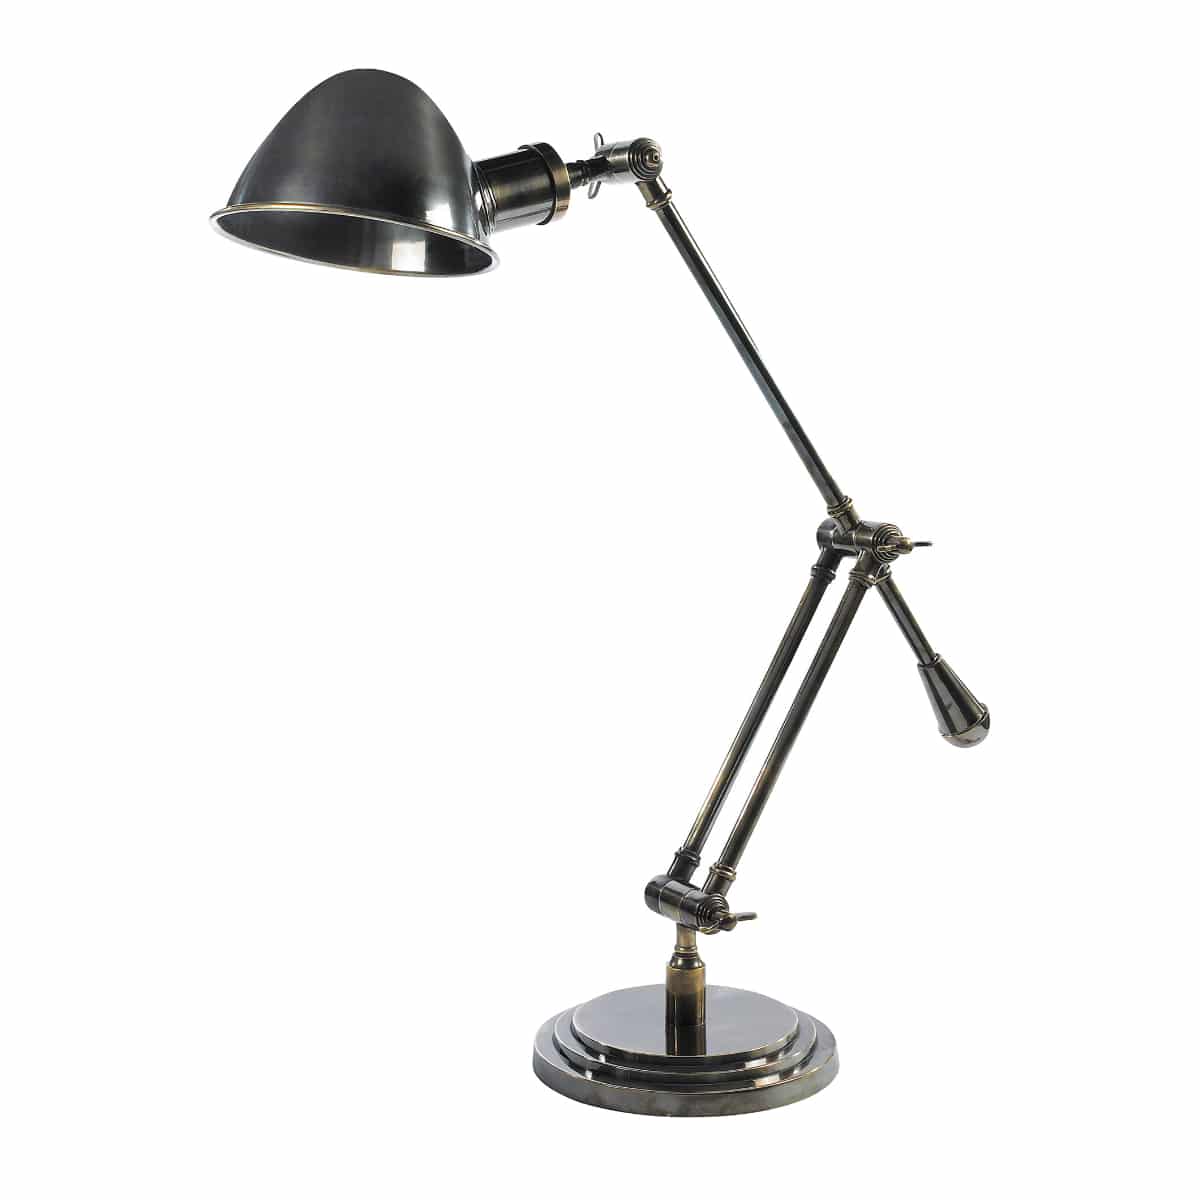 Lamp Buying Guide - Desk Lamp Types